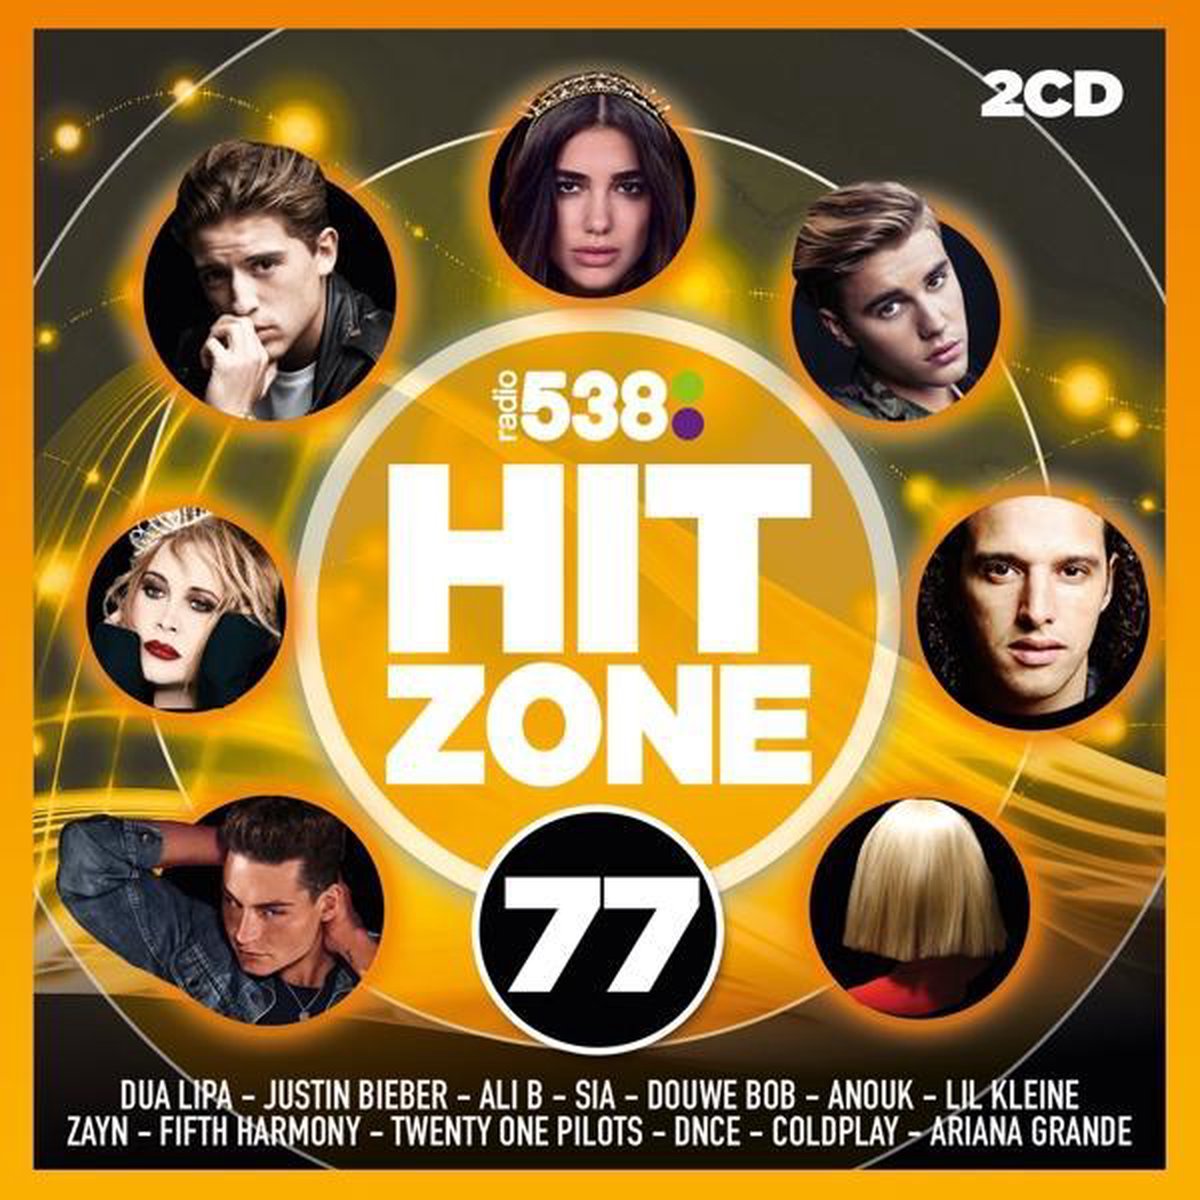 Maryanne Jones partij geboren 538 Hitzone 77, various artists | CD (album) | Muziek | bol.com